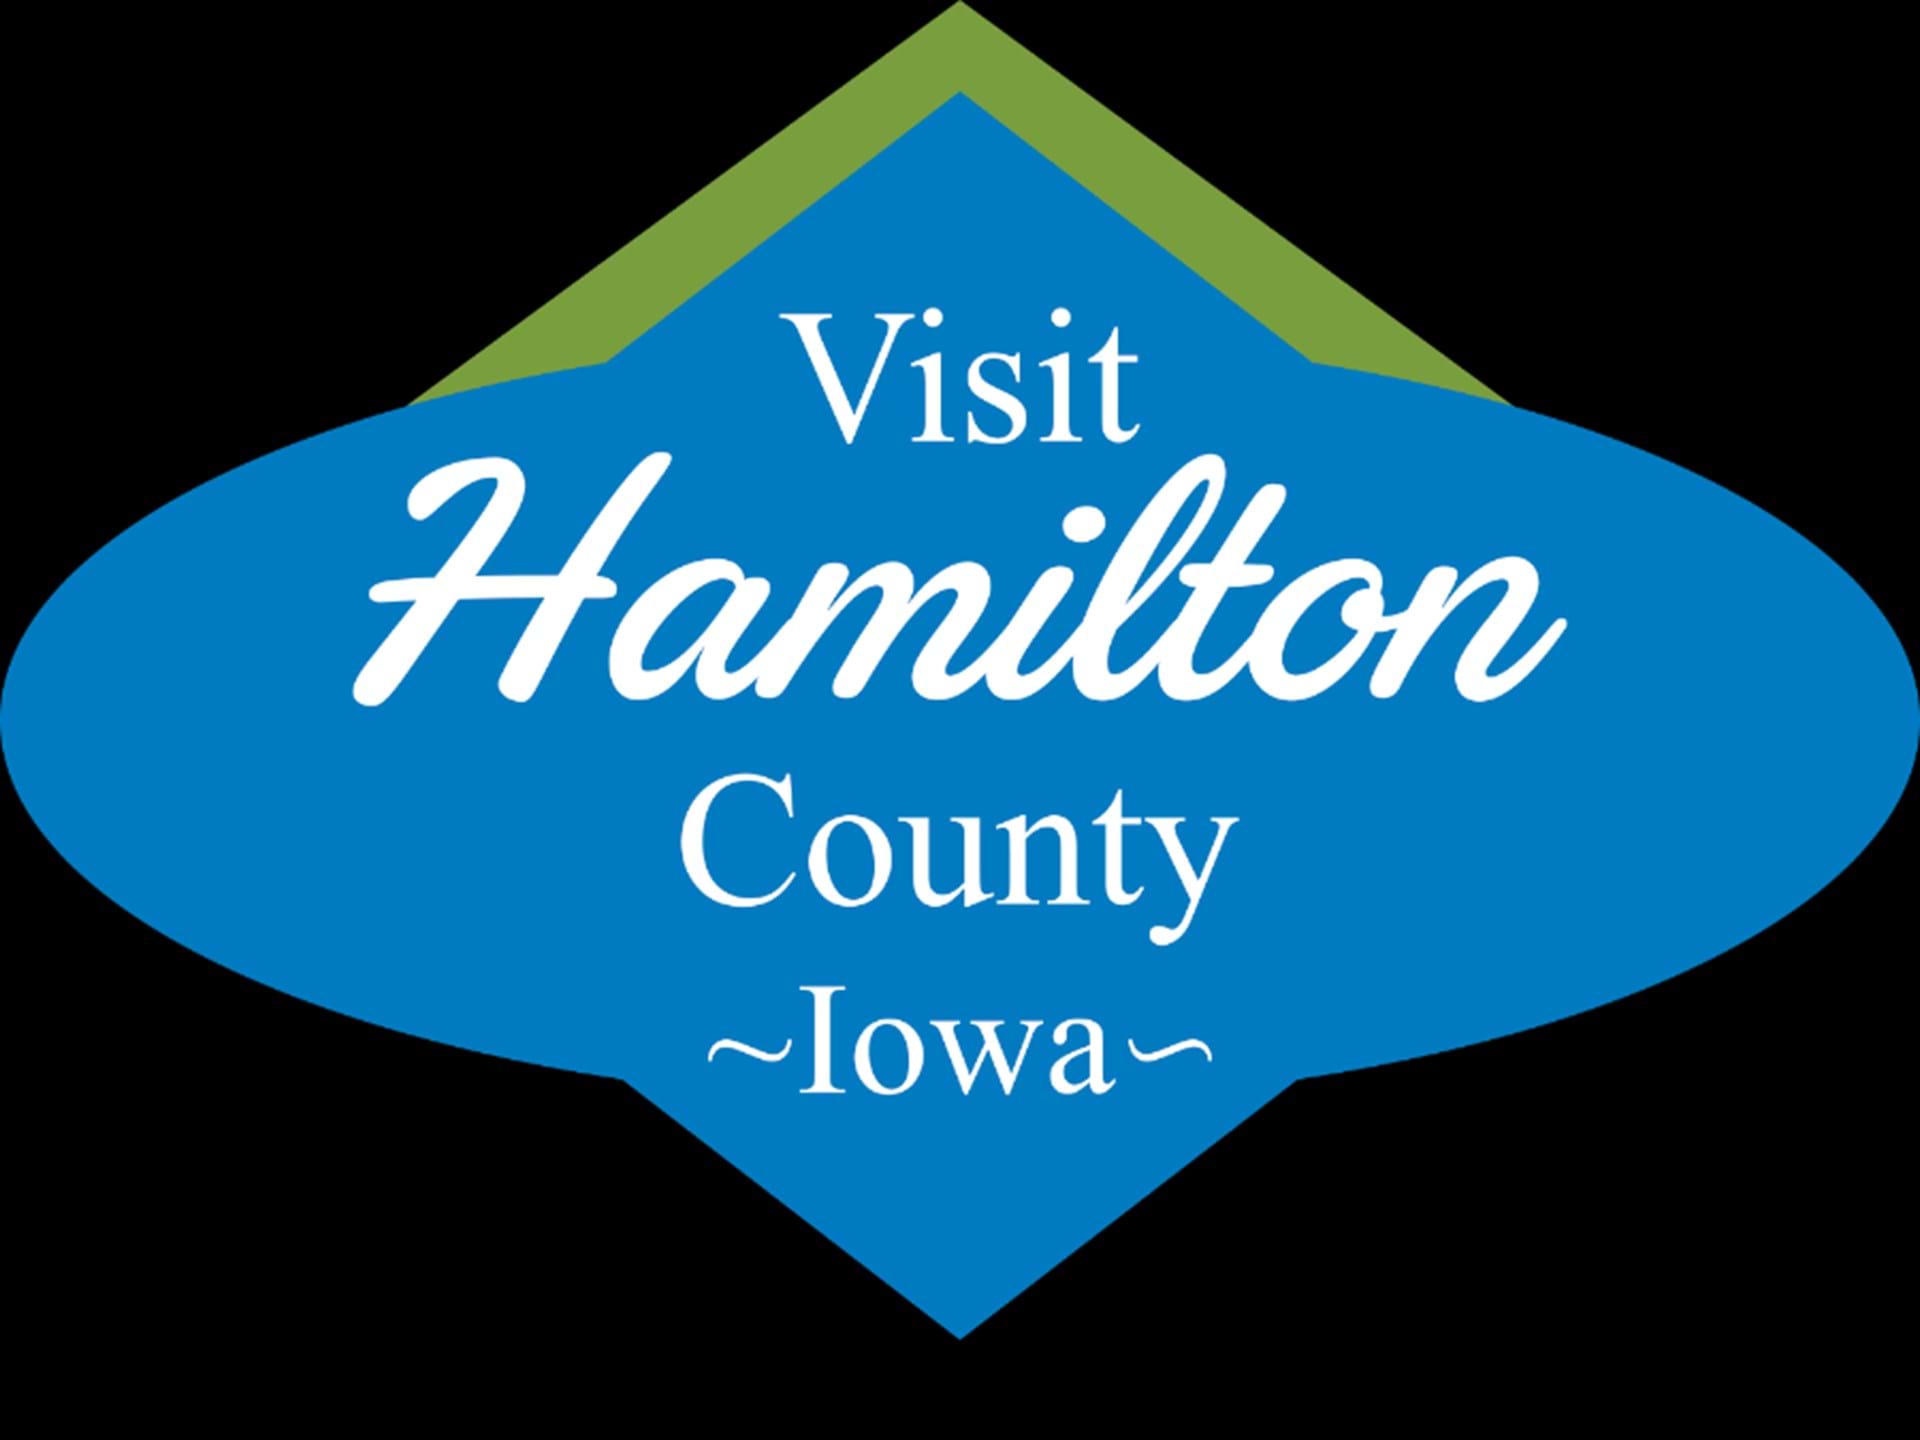 Visit Hamilton County Iowa